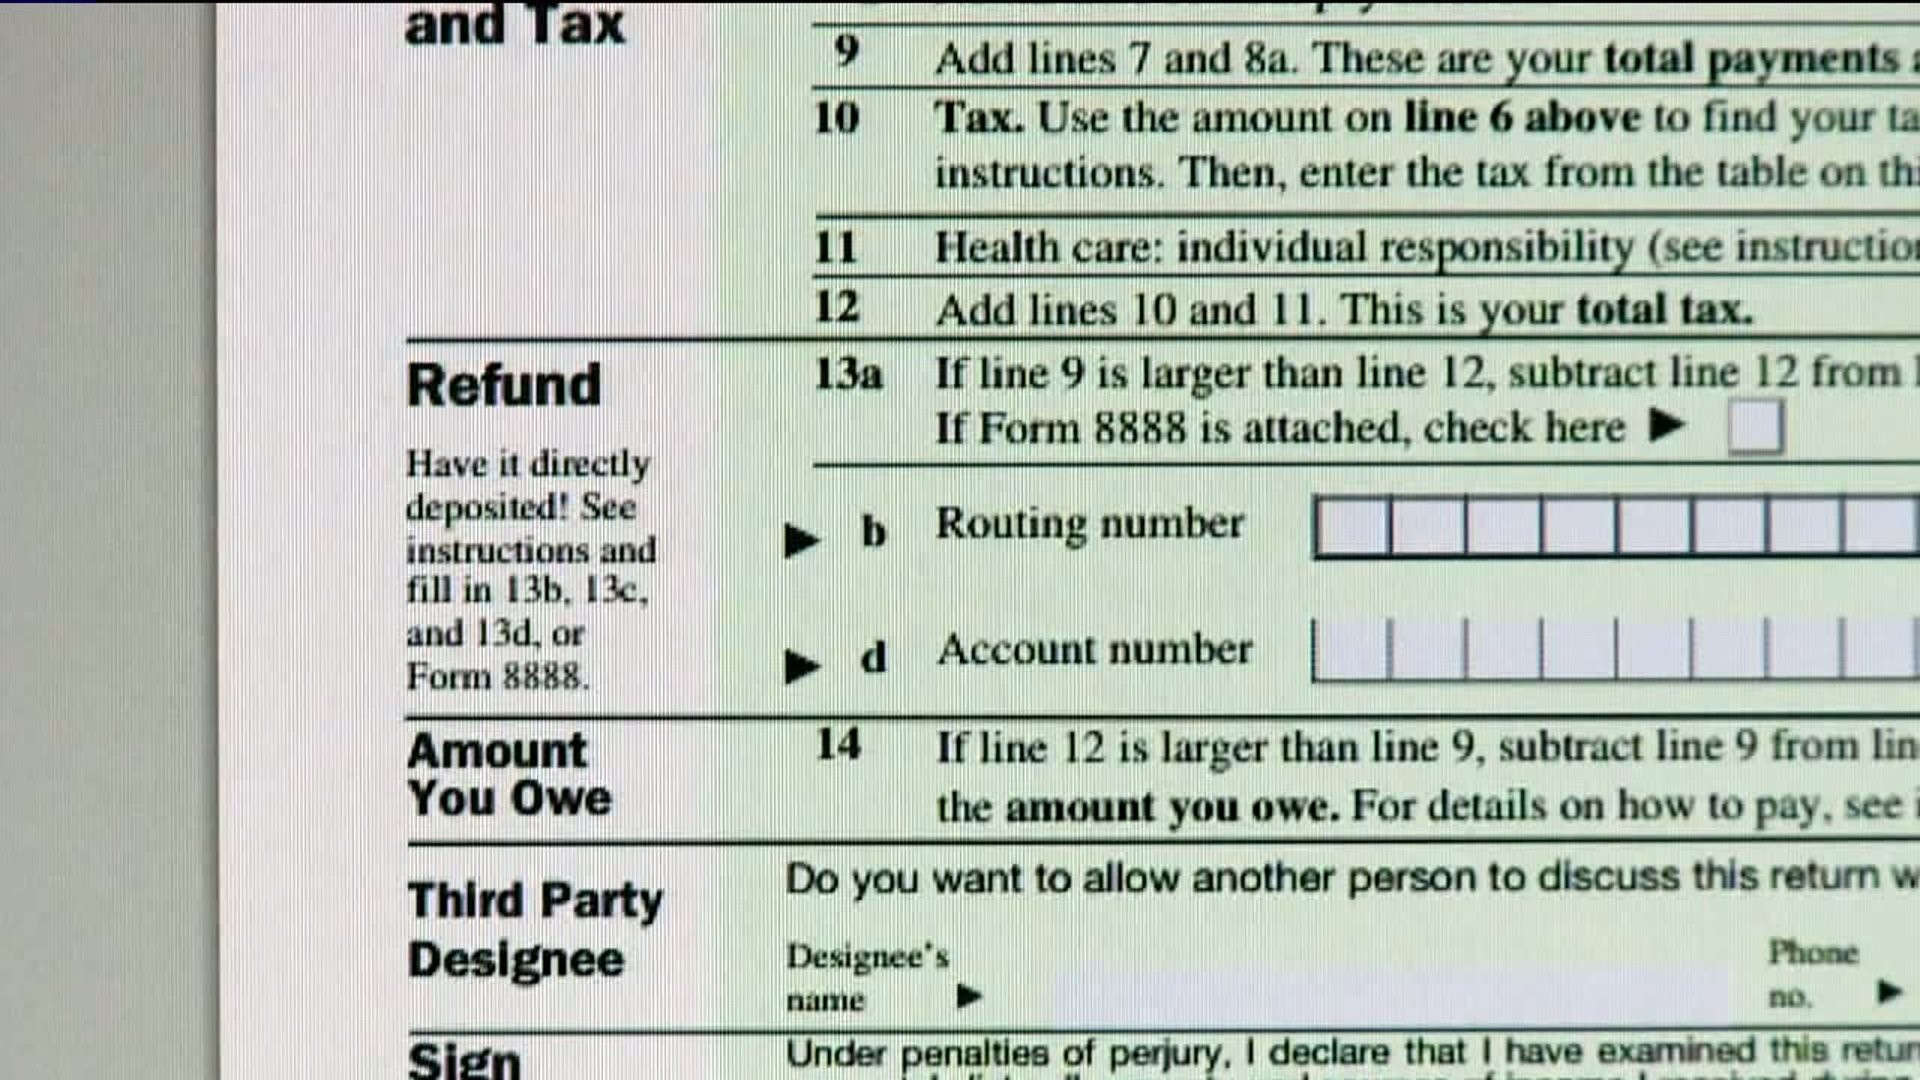 Pennsylvania personal tax returns deadline extended